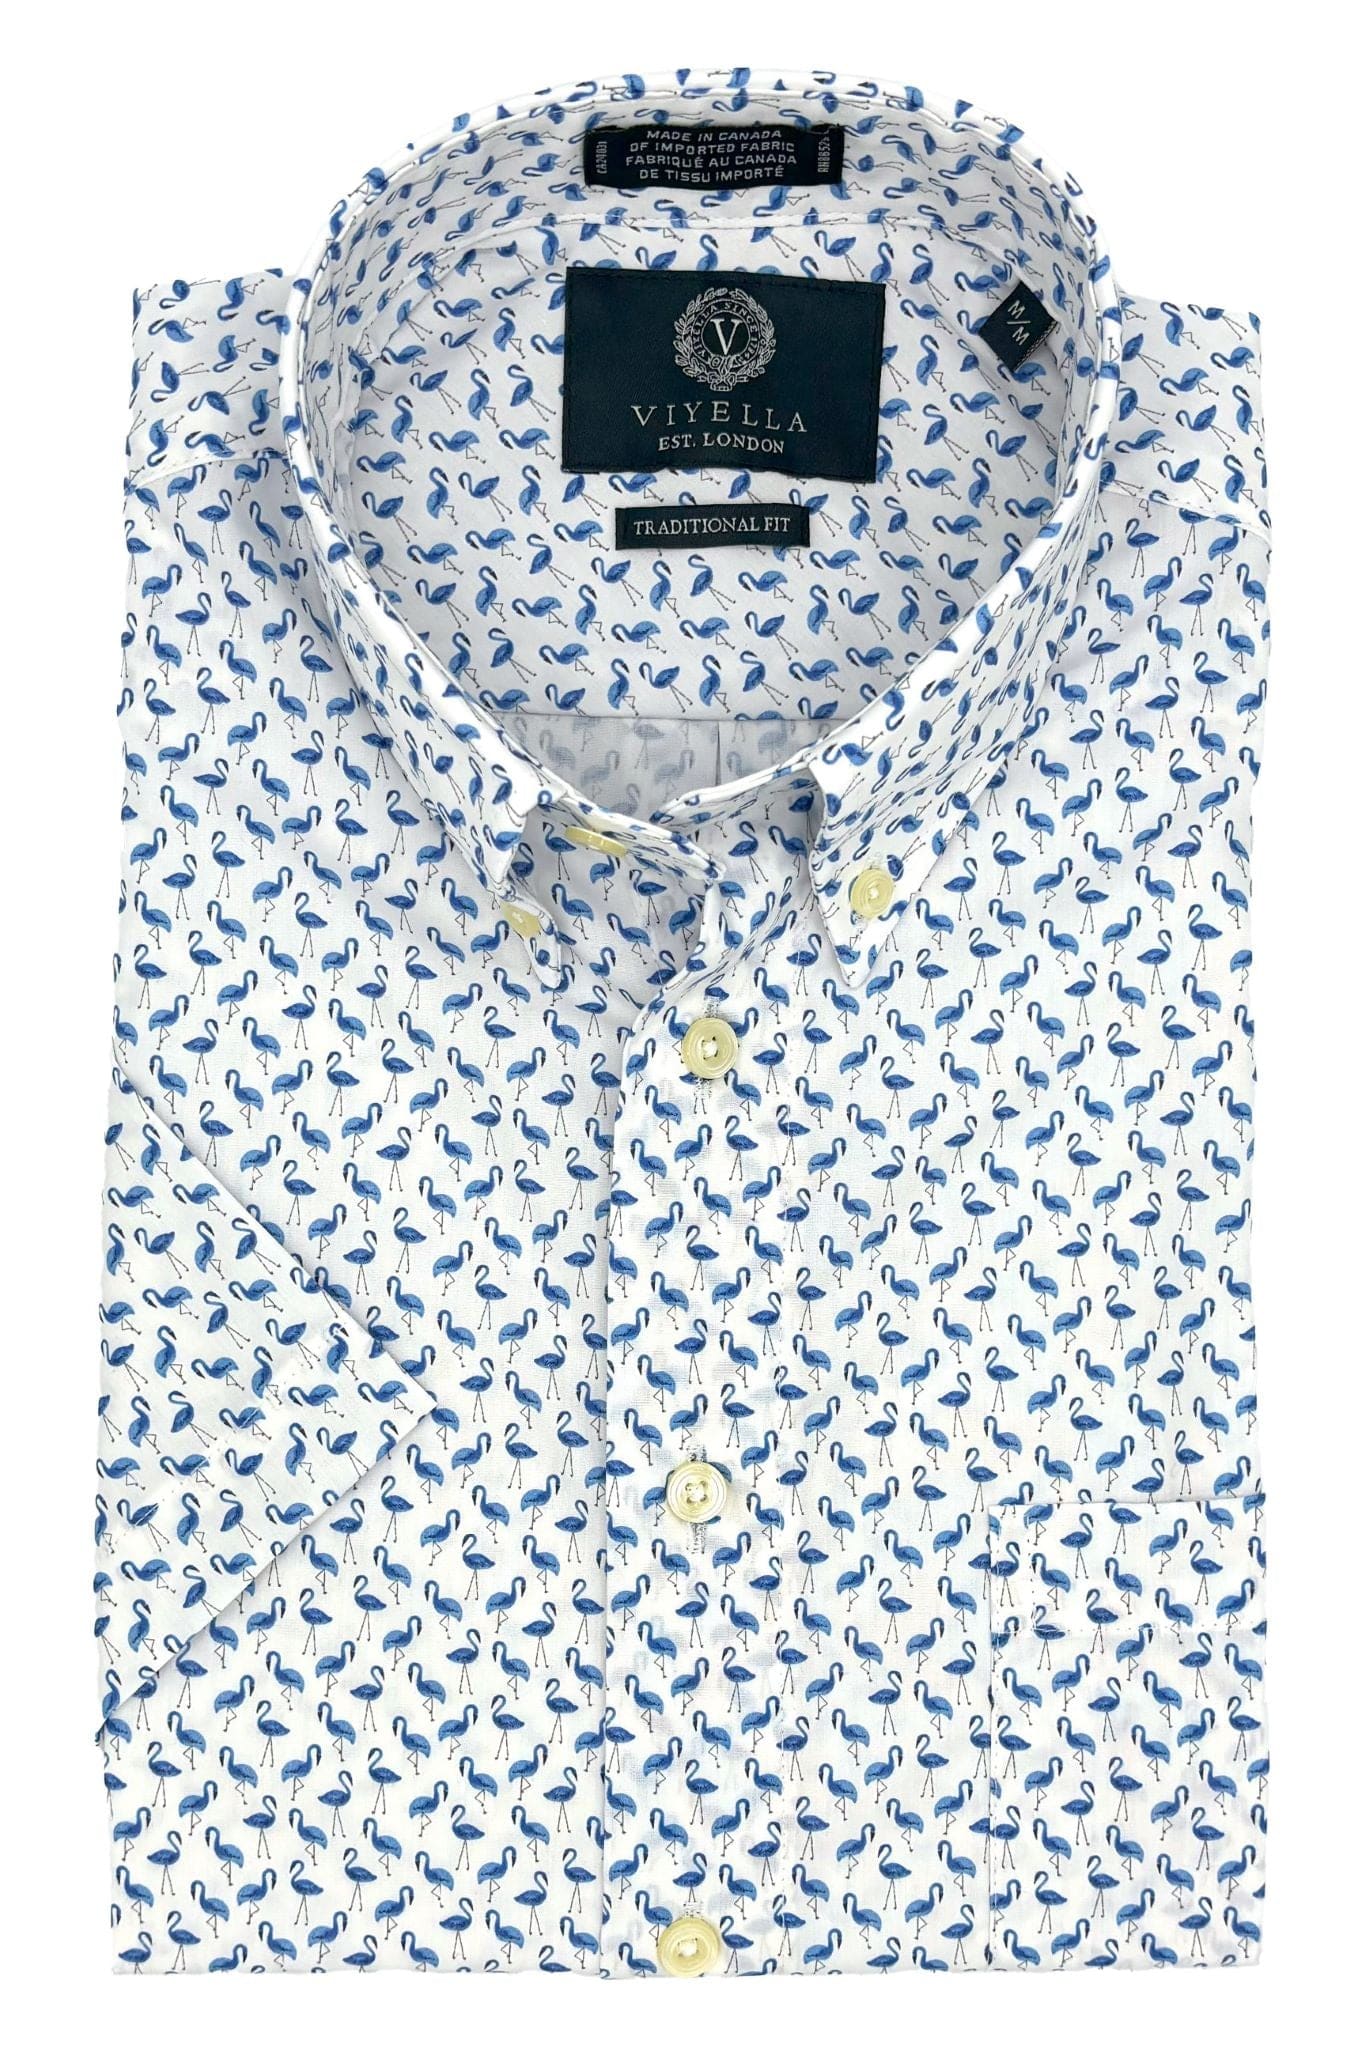 Viyella Men's Short Sleeve Button Down Shirts - Blue Flamingo Print